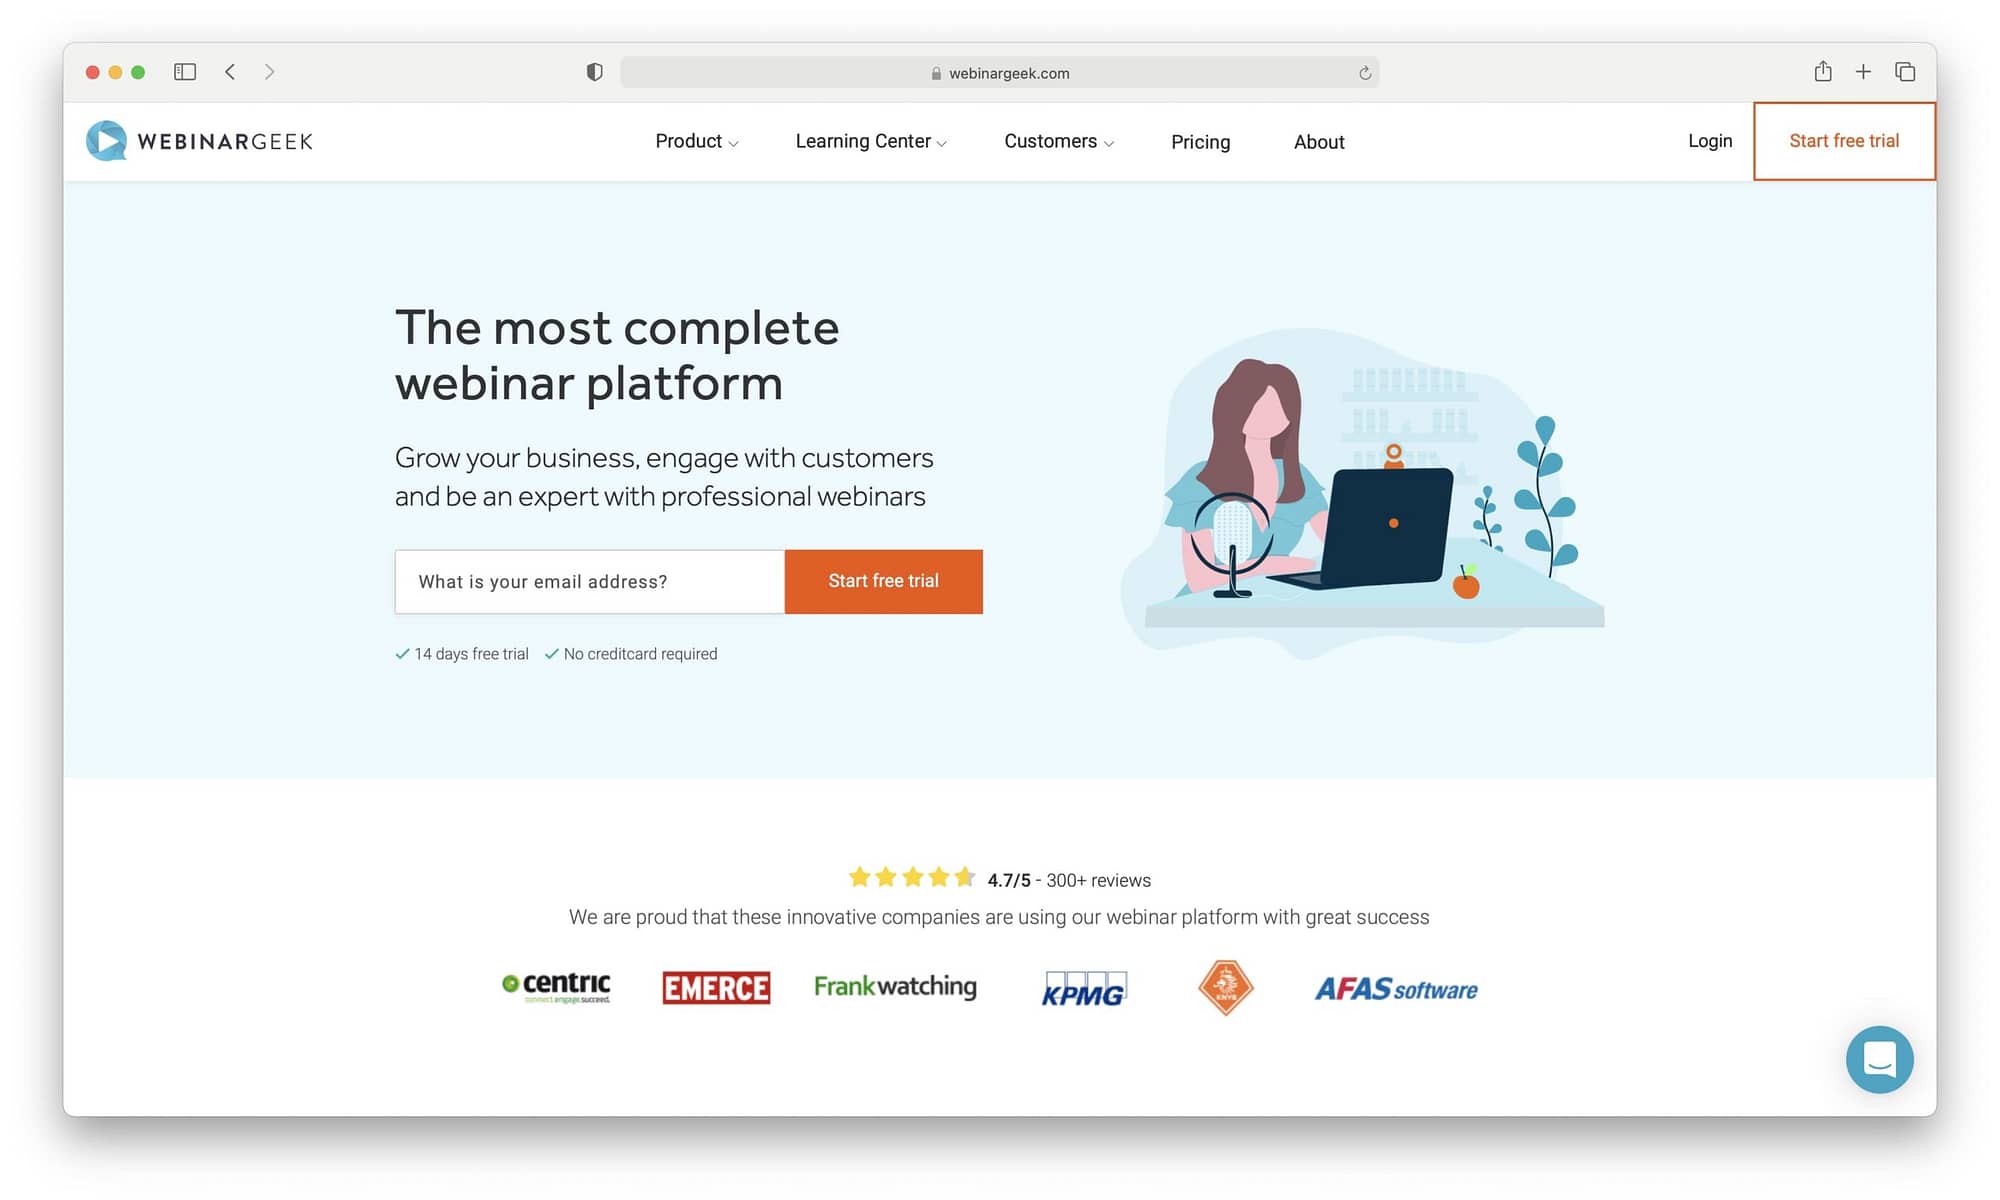 How to create a webinar: WebinarGeek